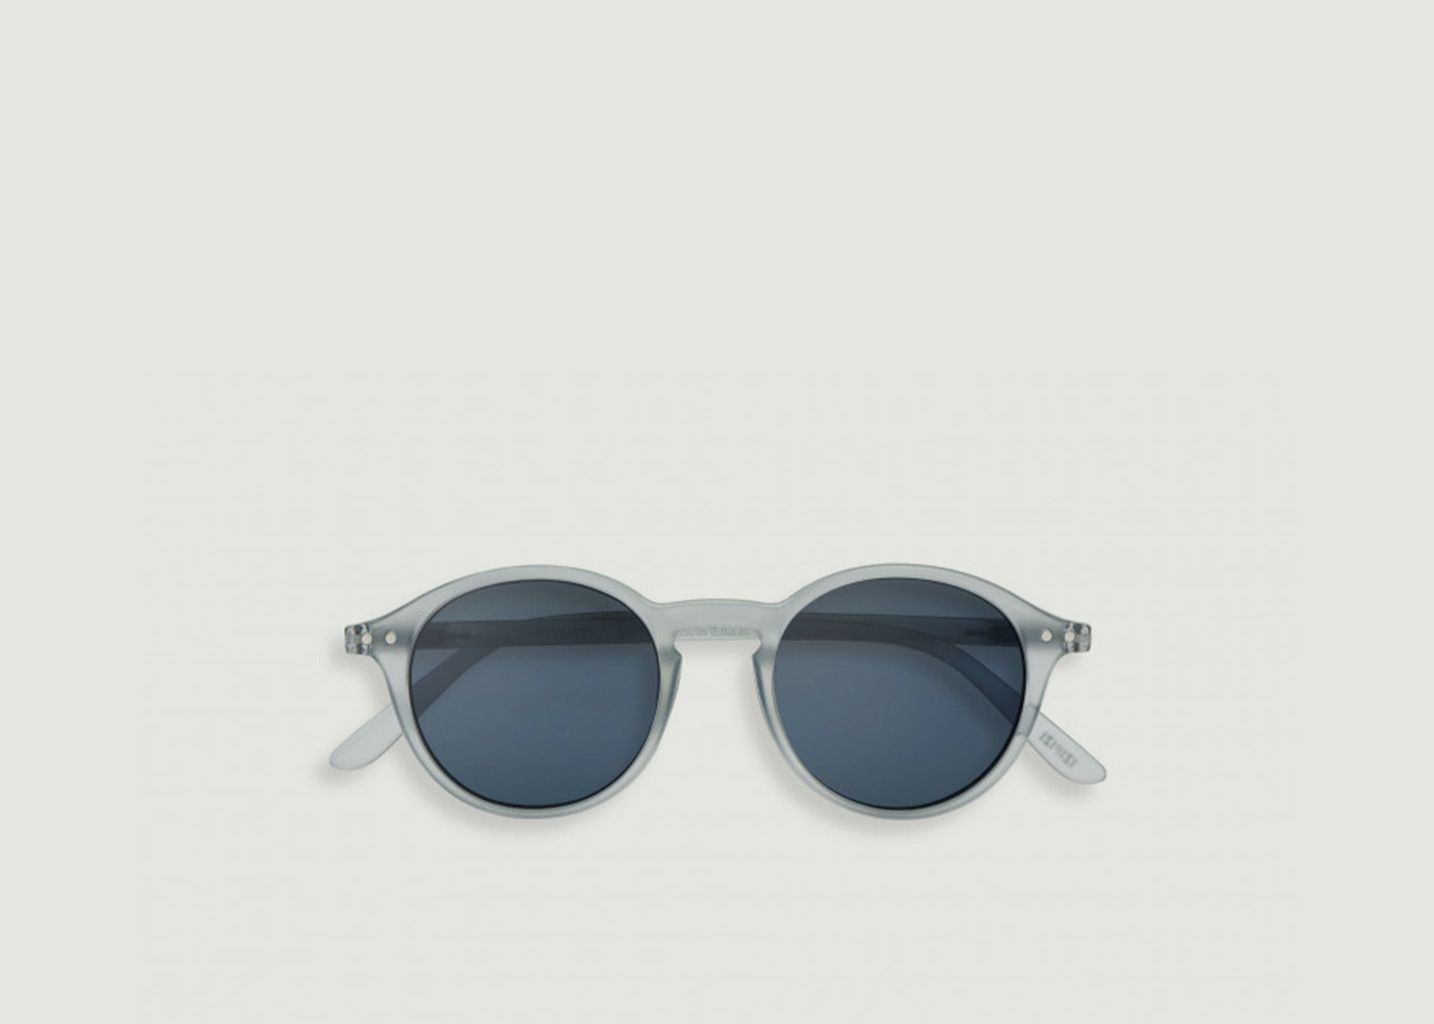 Sunglasses #D SUN Frosted Blue - Izipizi